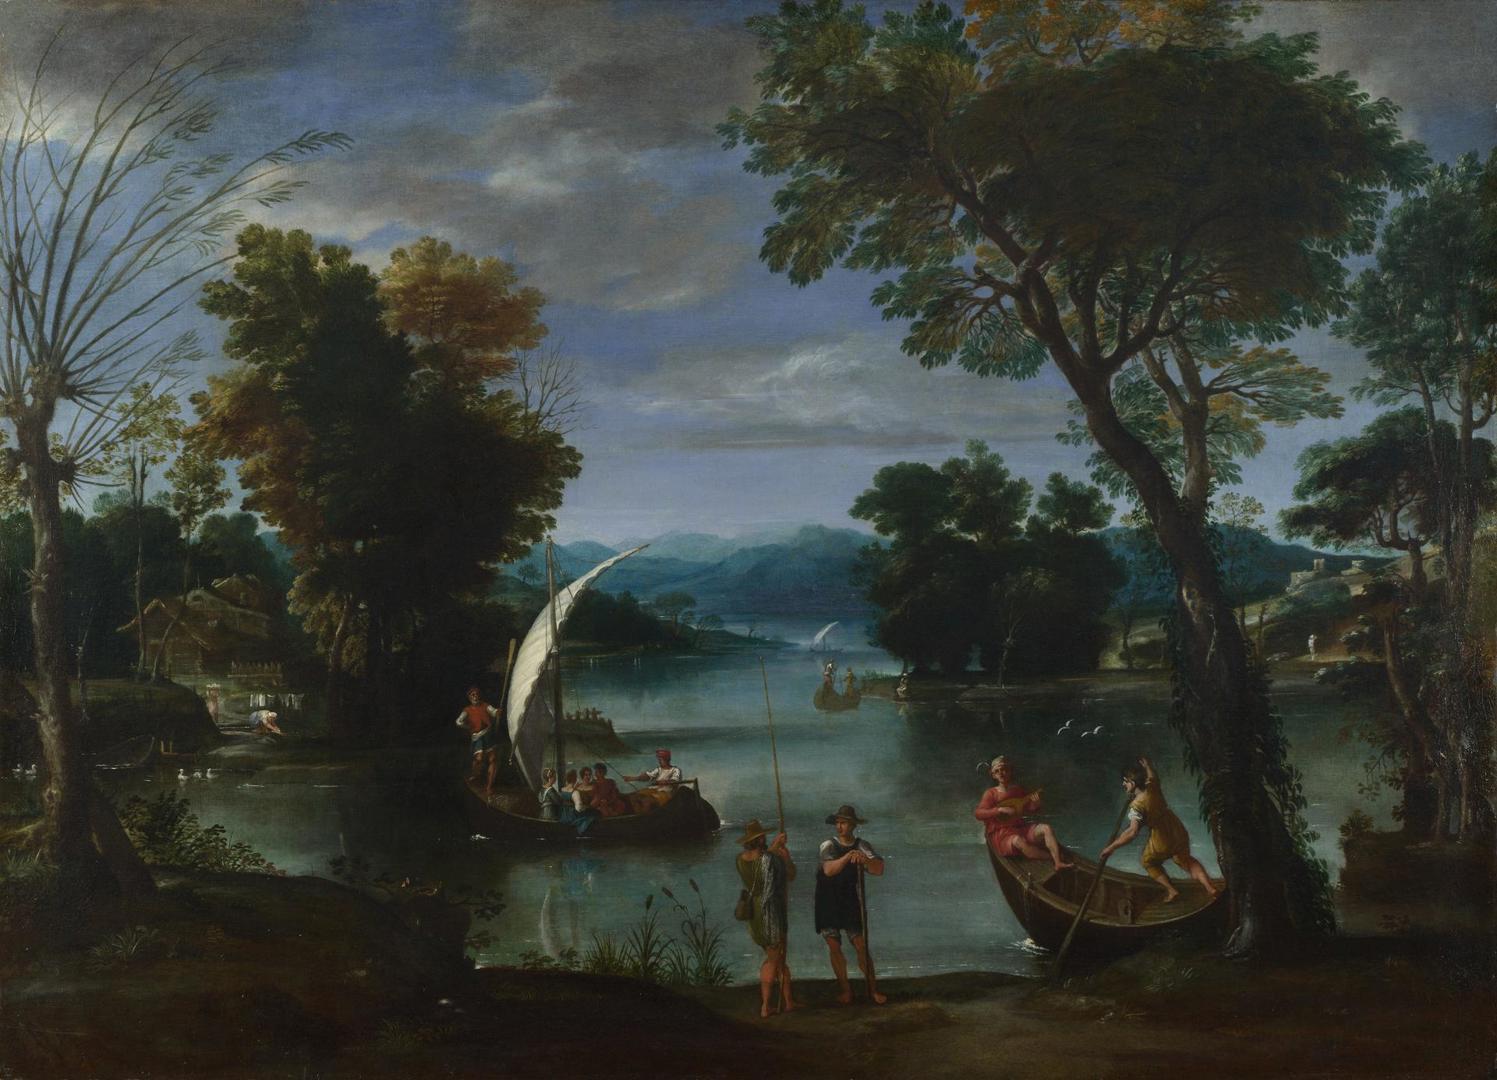 Landscape with a River and Boats by Giovanni Battista Viola